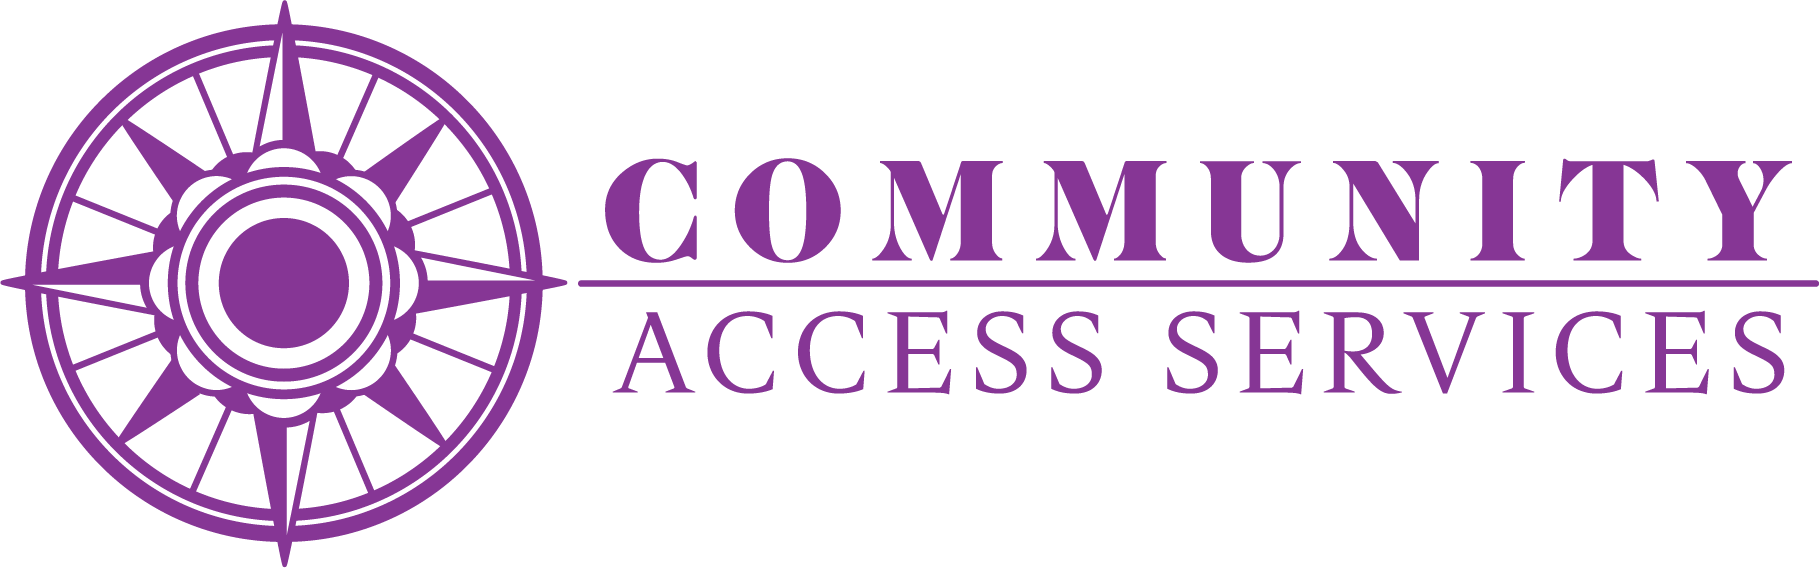 Community Access Services